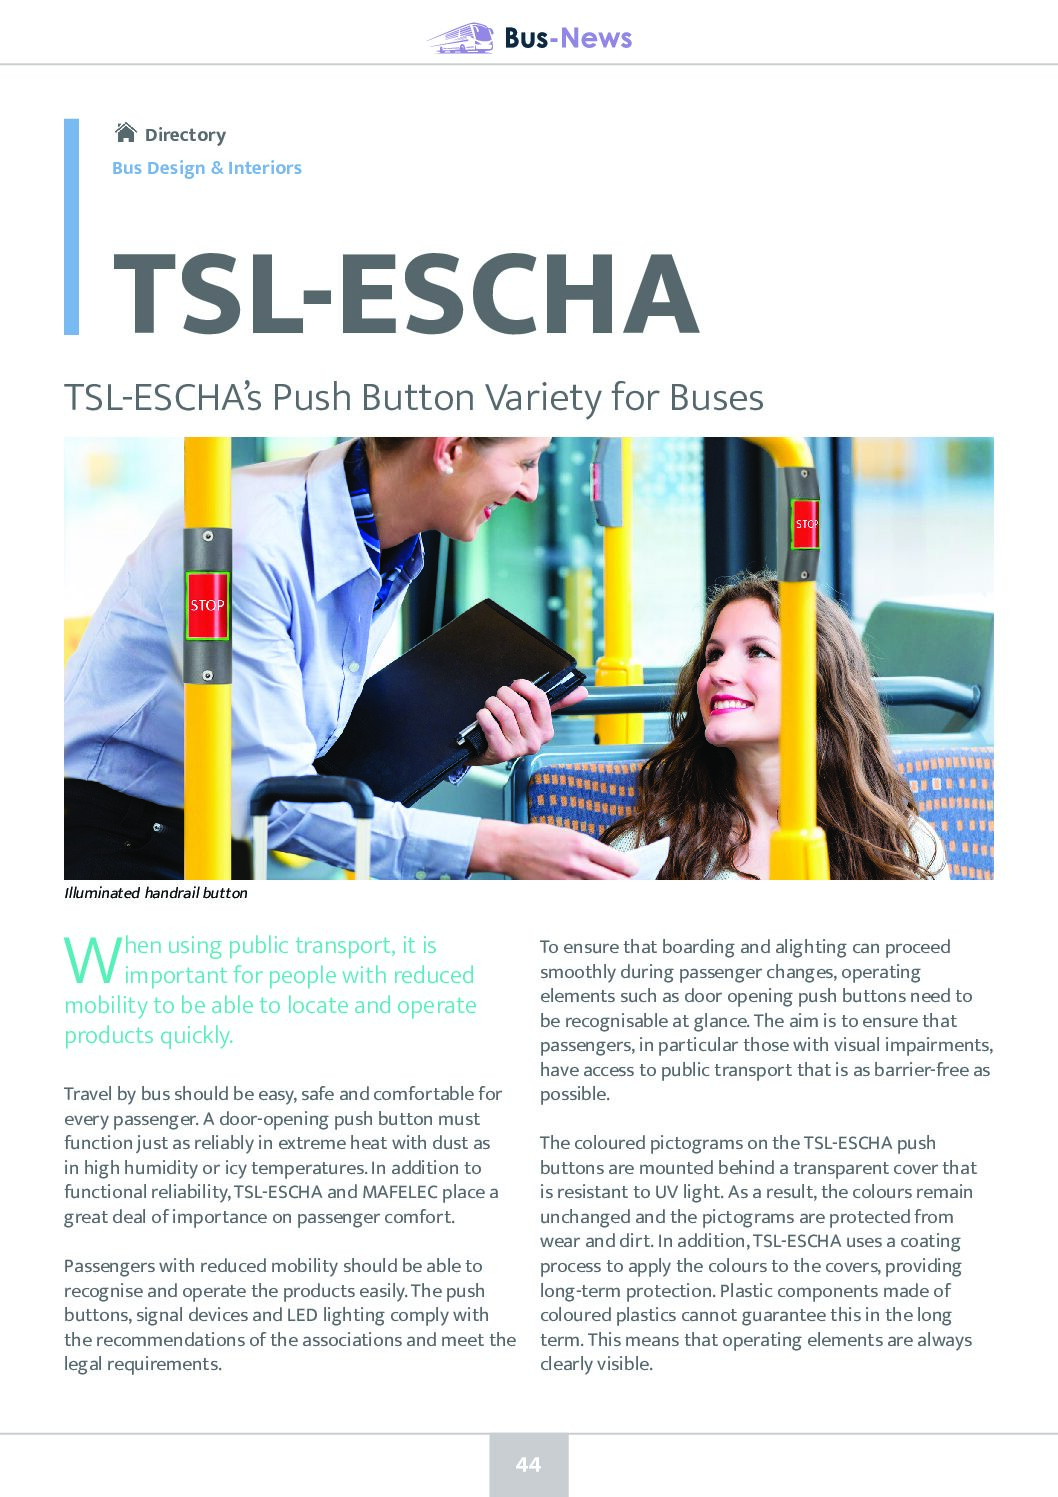 TSL-ESCHA’s Push Button Variety for Buses